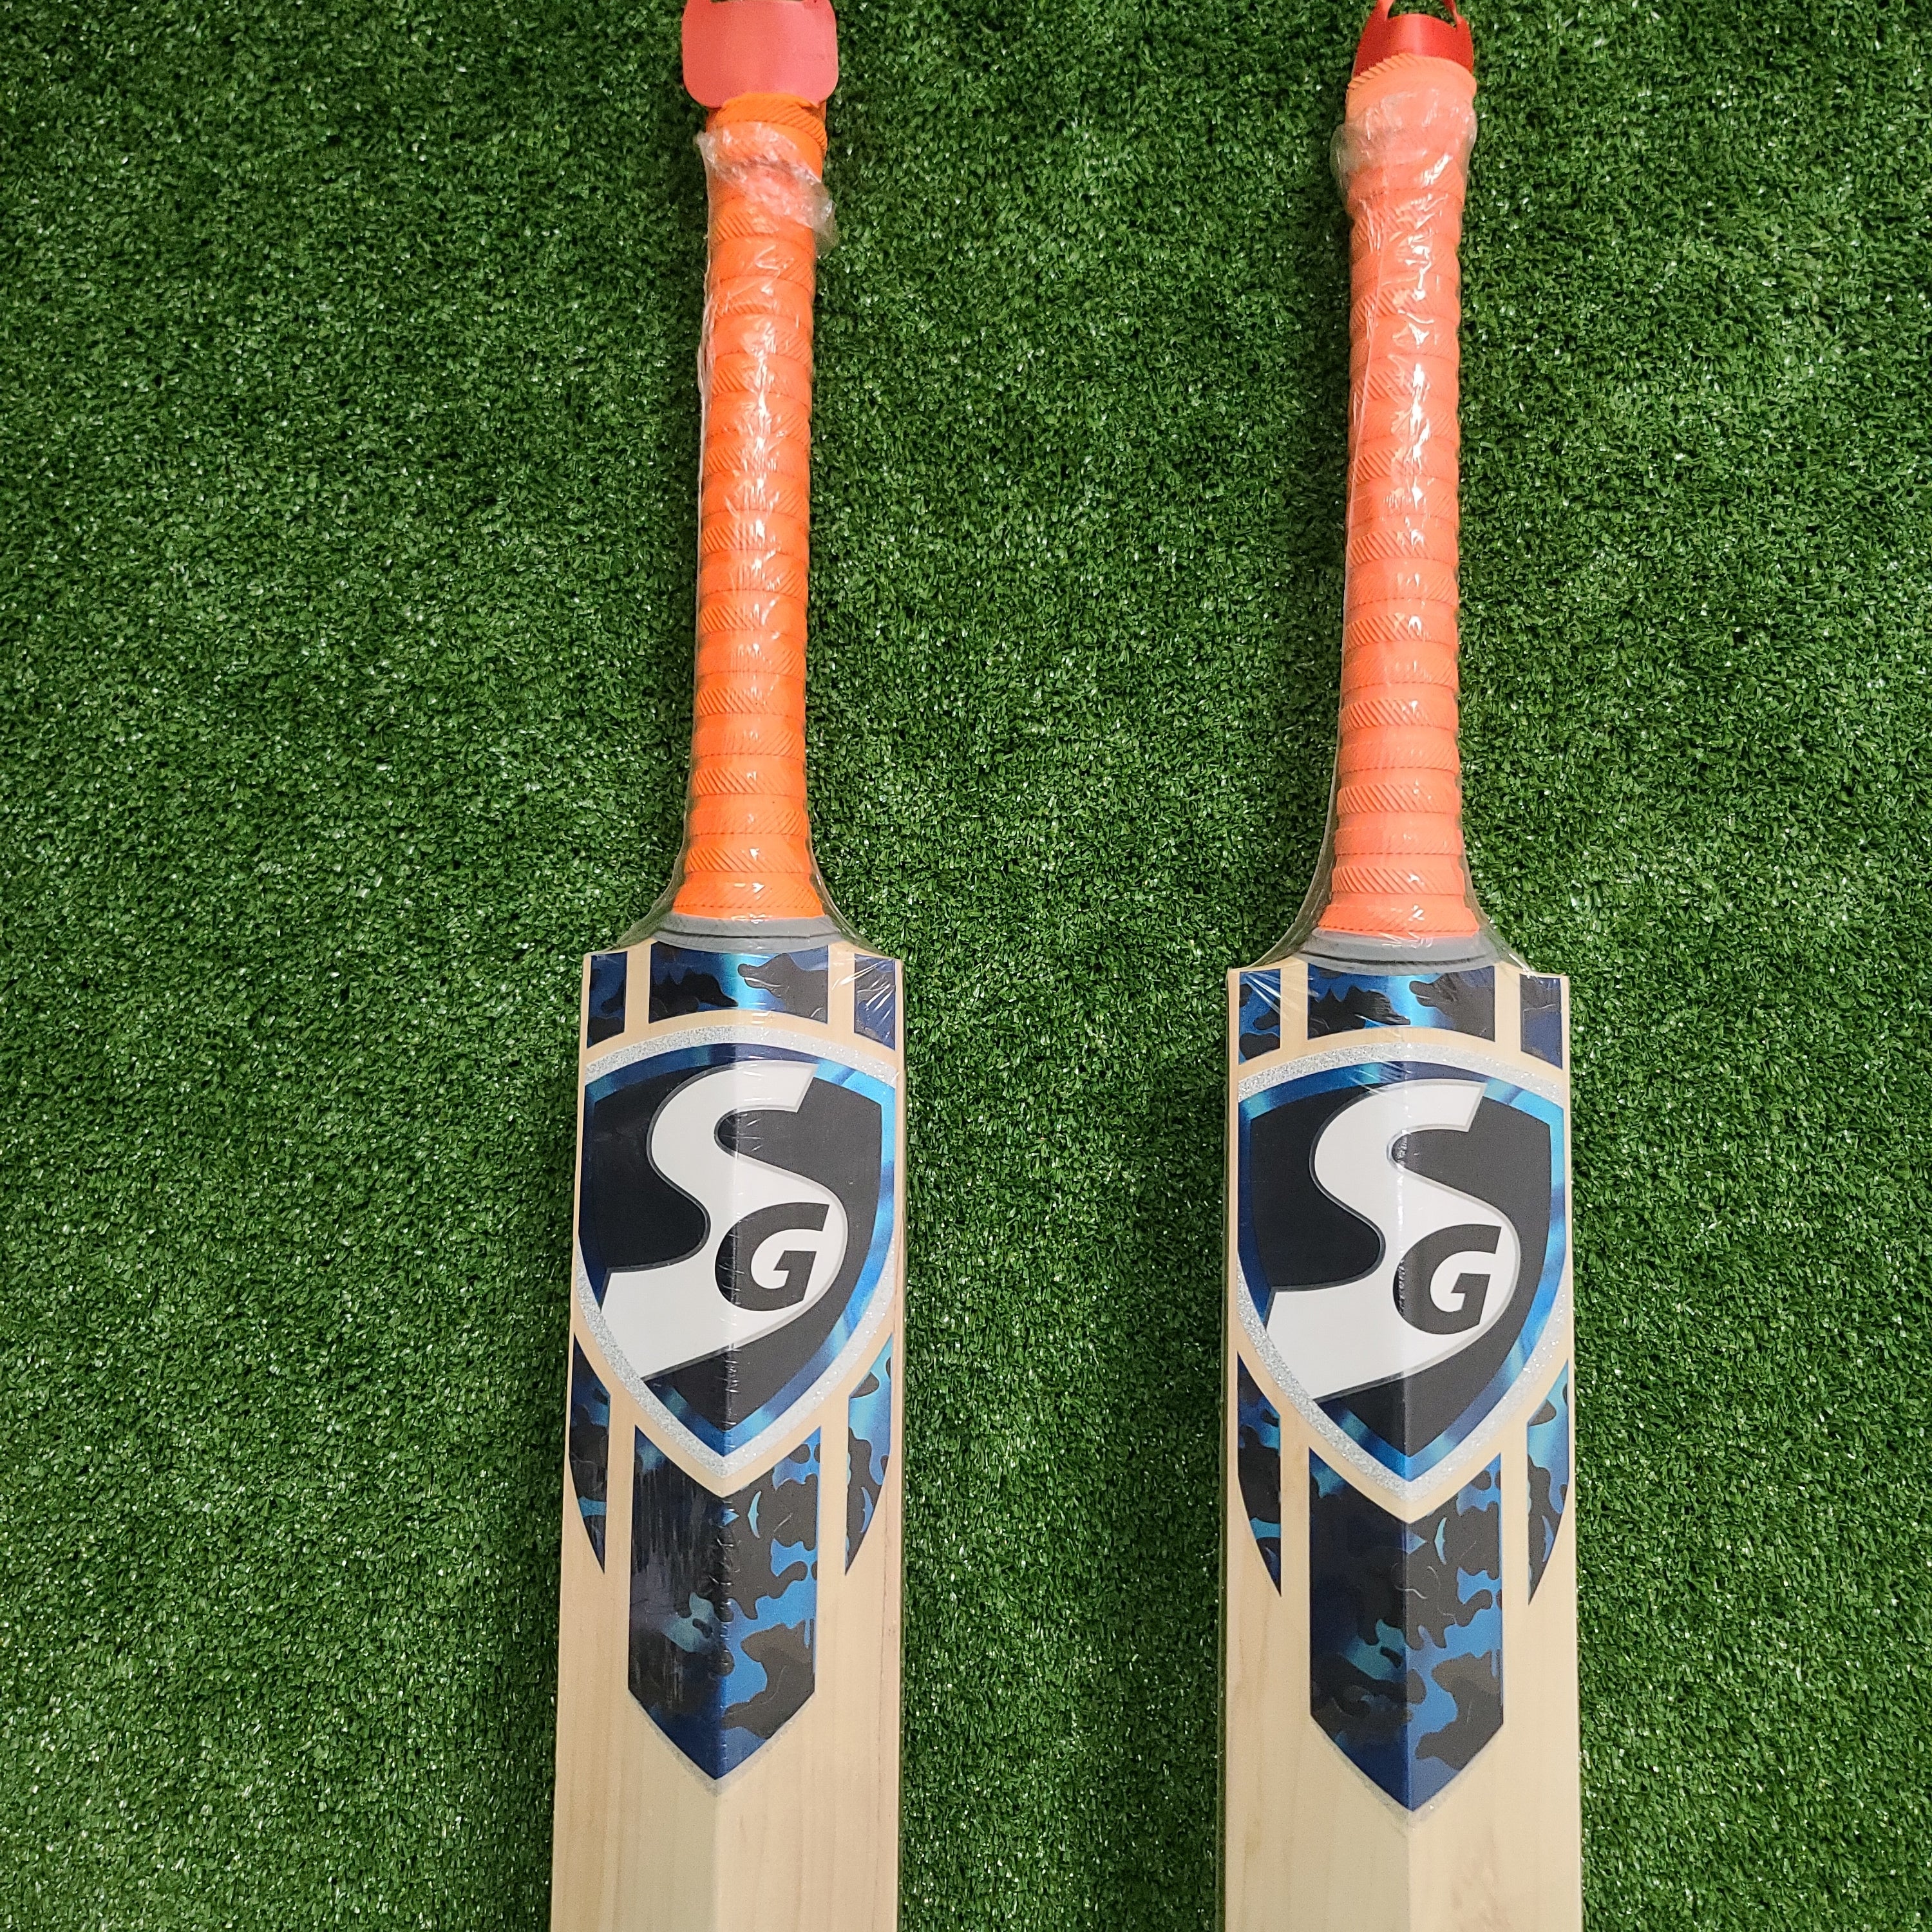 SG RP Ultimate Cricket Bat